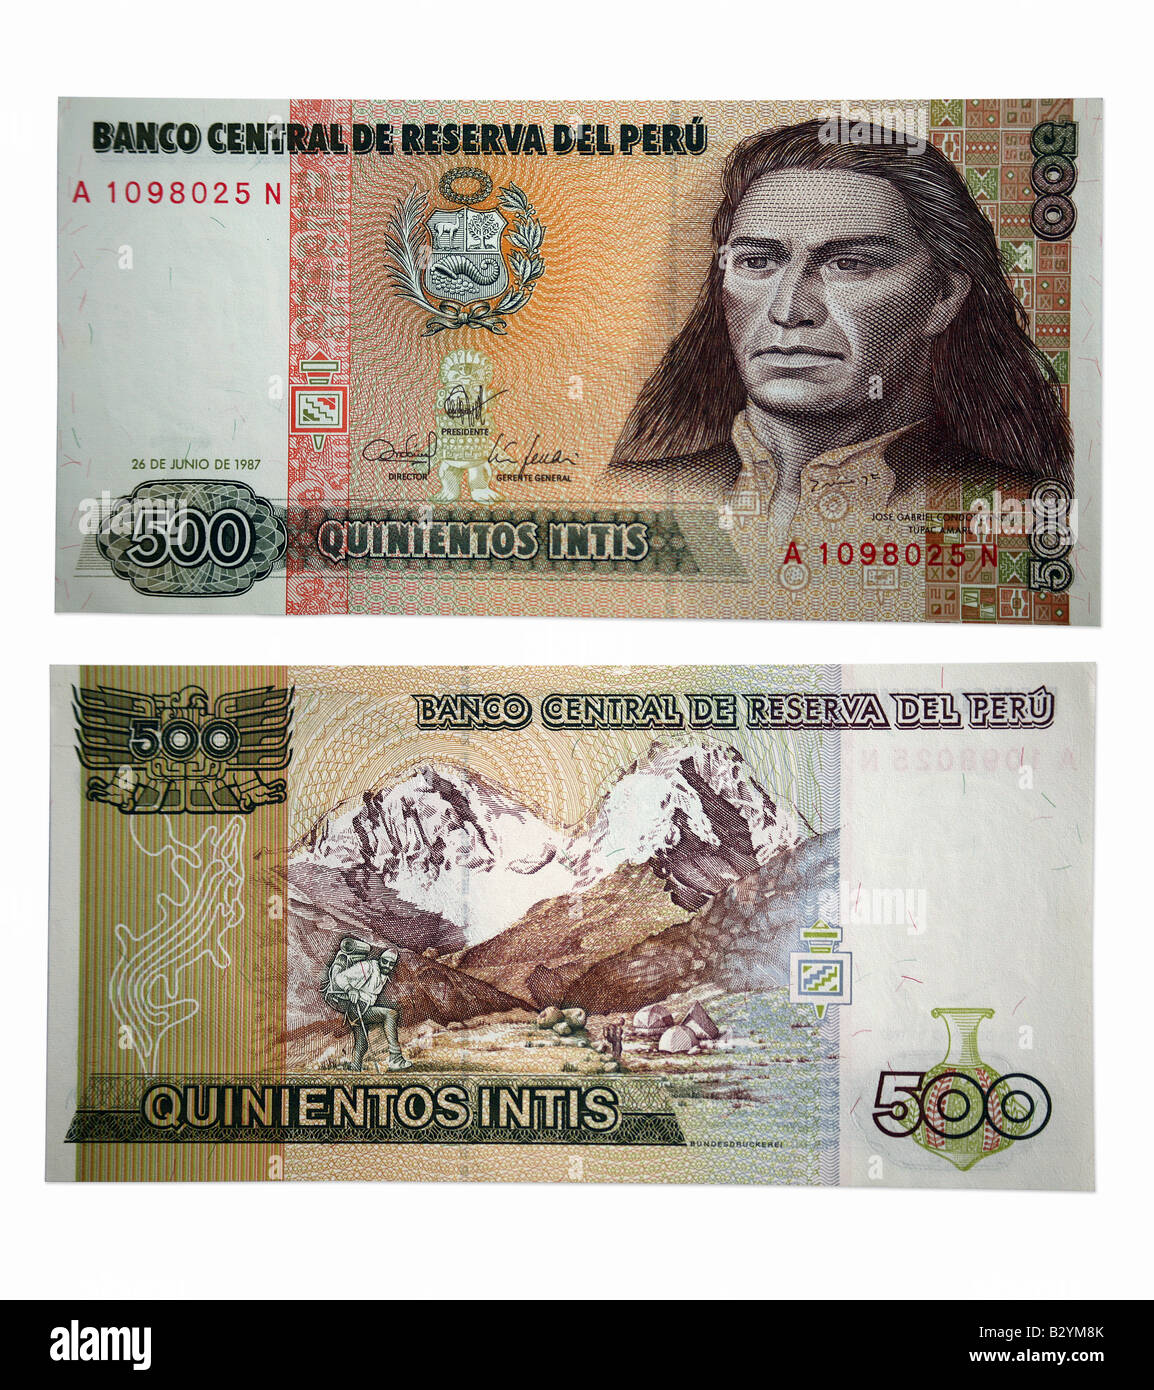 Quinientos Intis 500 Peru Money from Peru Stock Photo